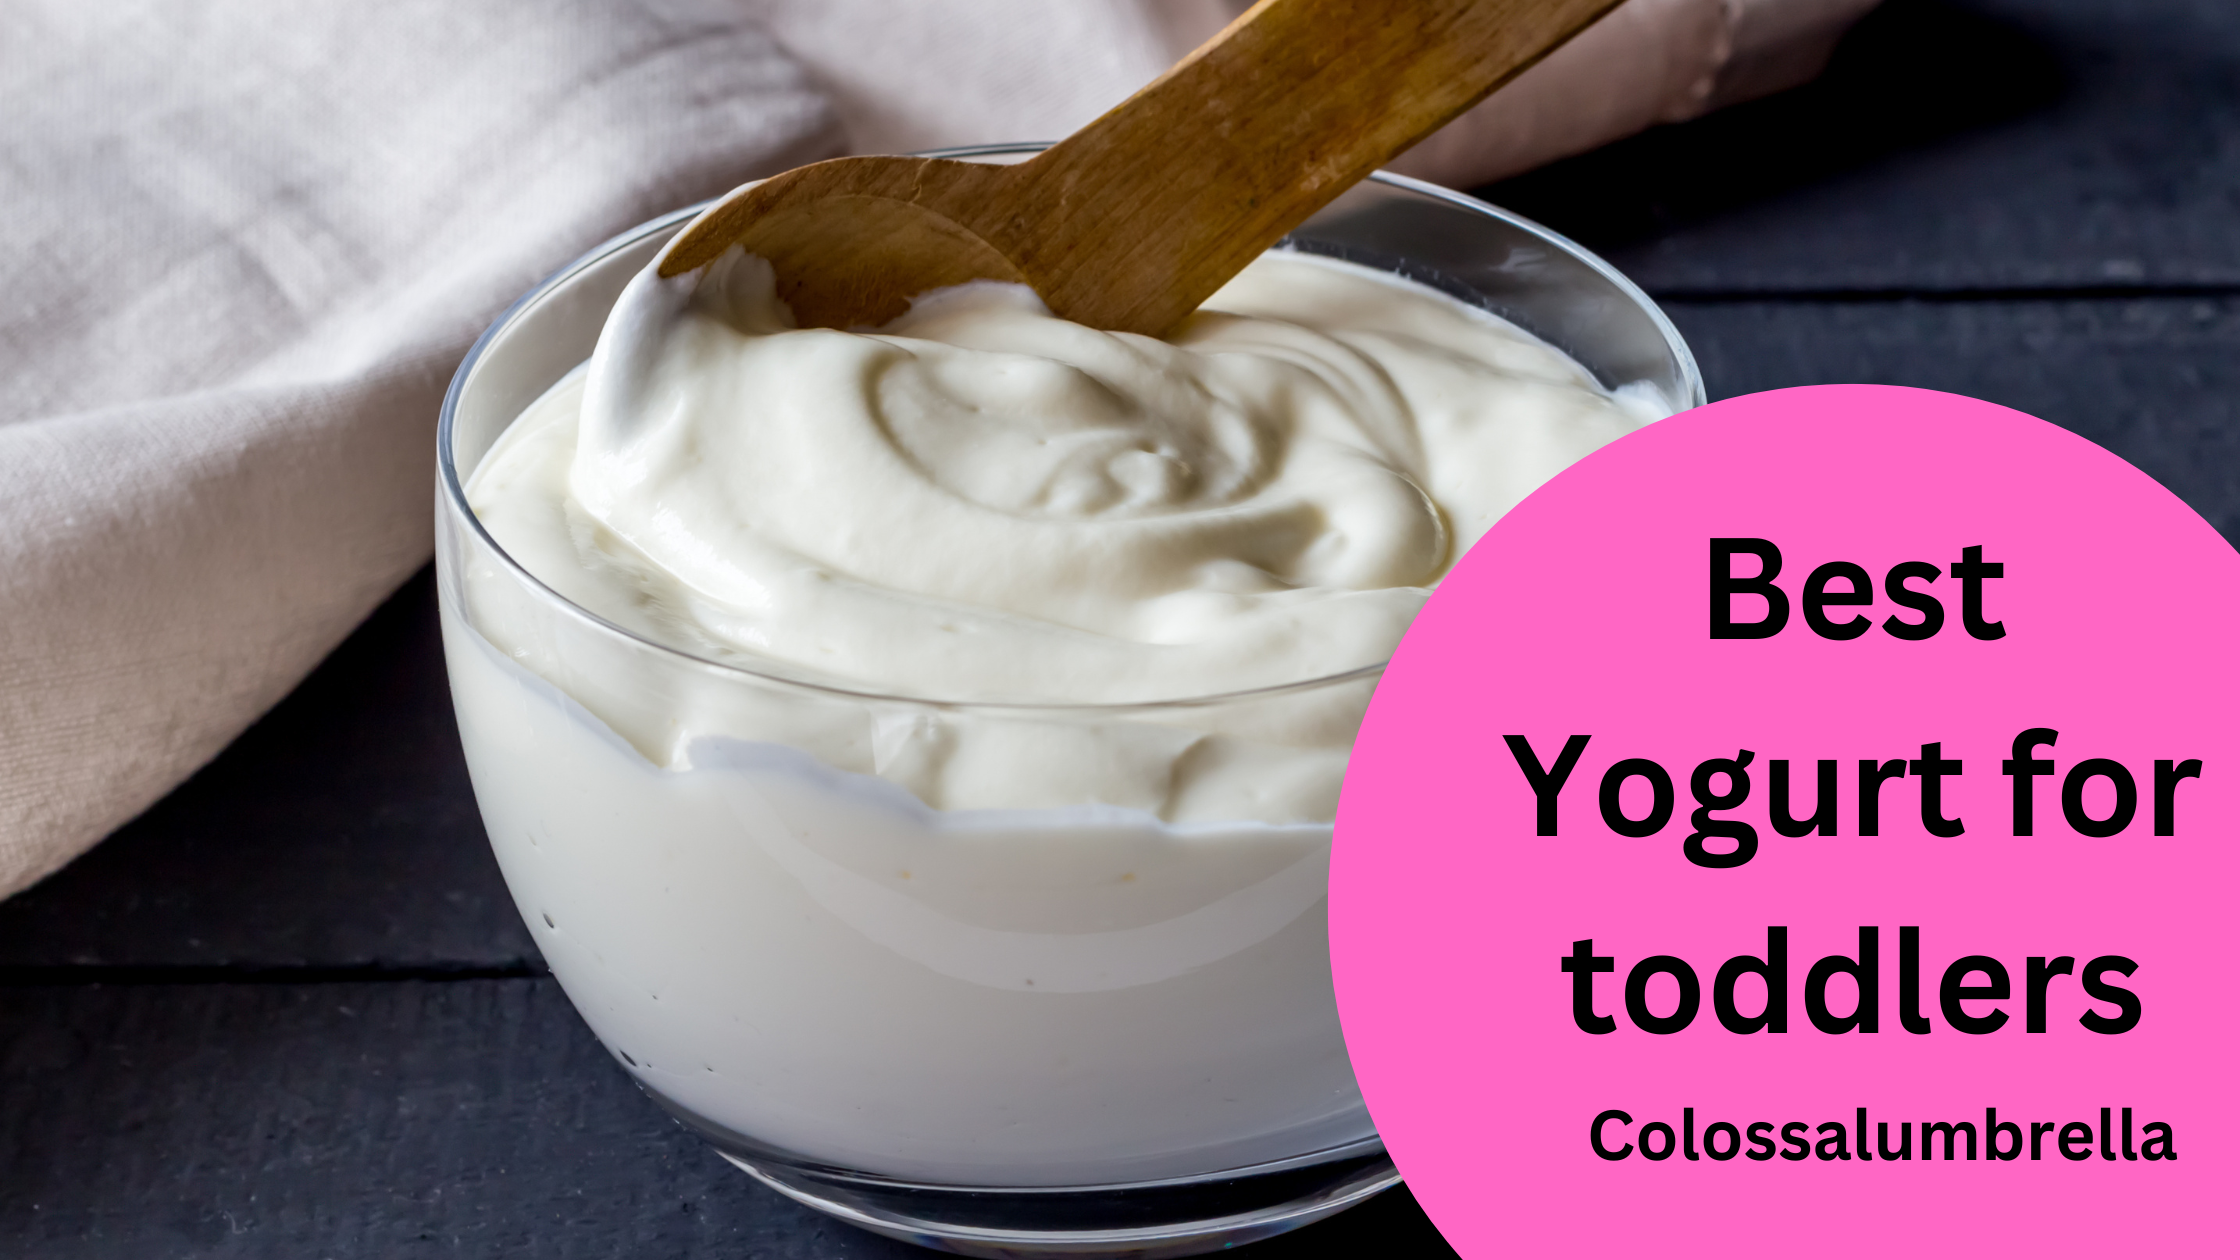 5 Best Yogurt for toddlers